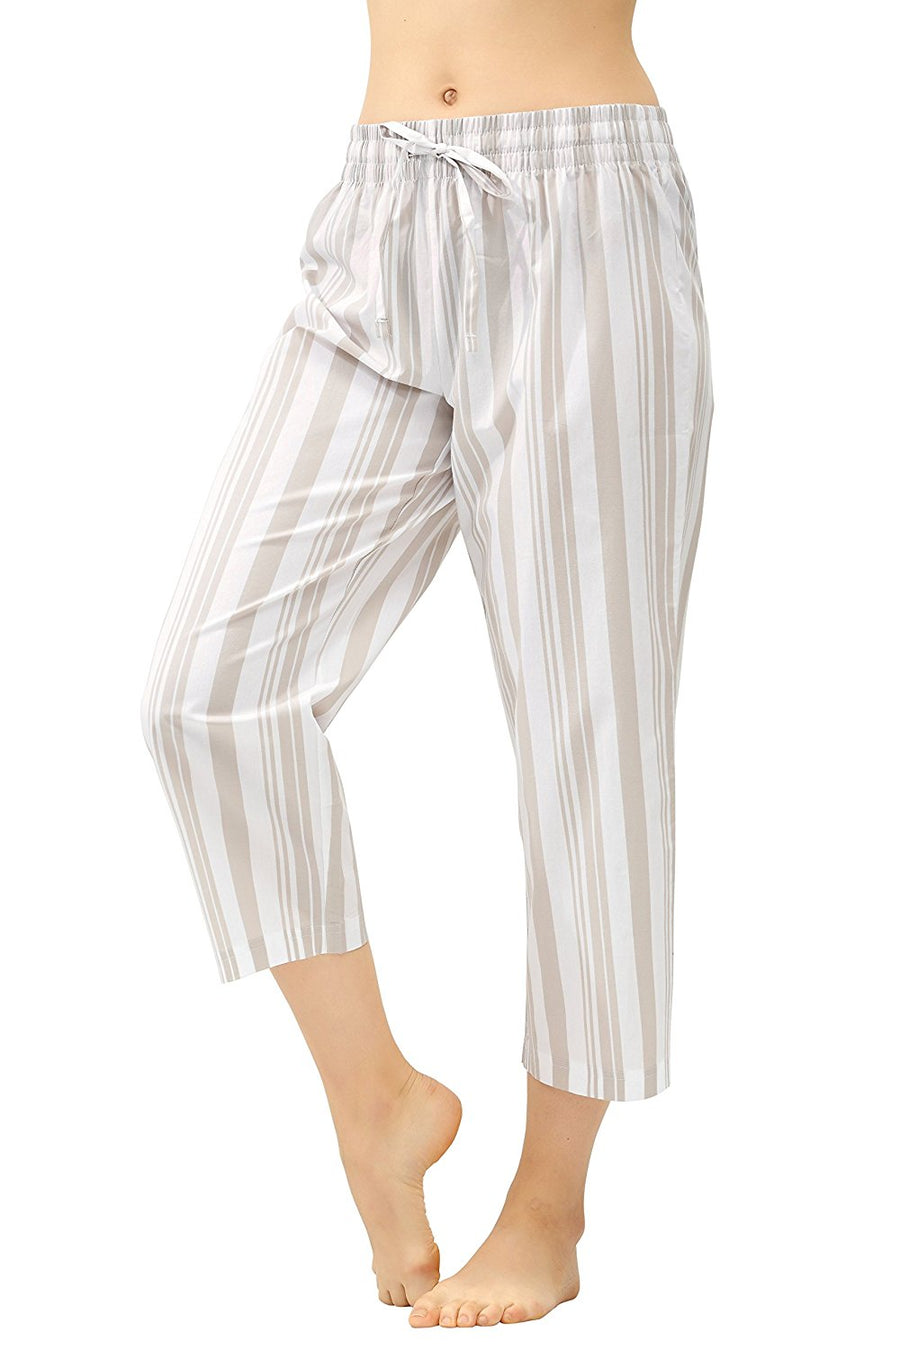 satin capri pajama pants from Sears.com